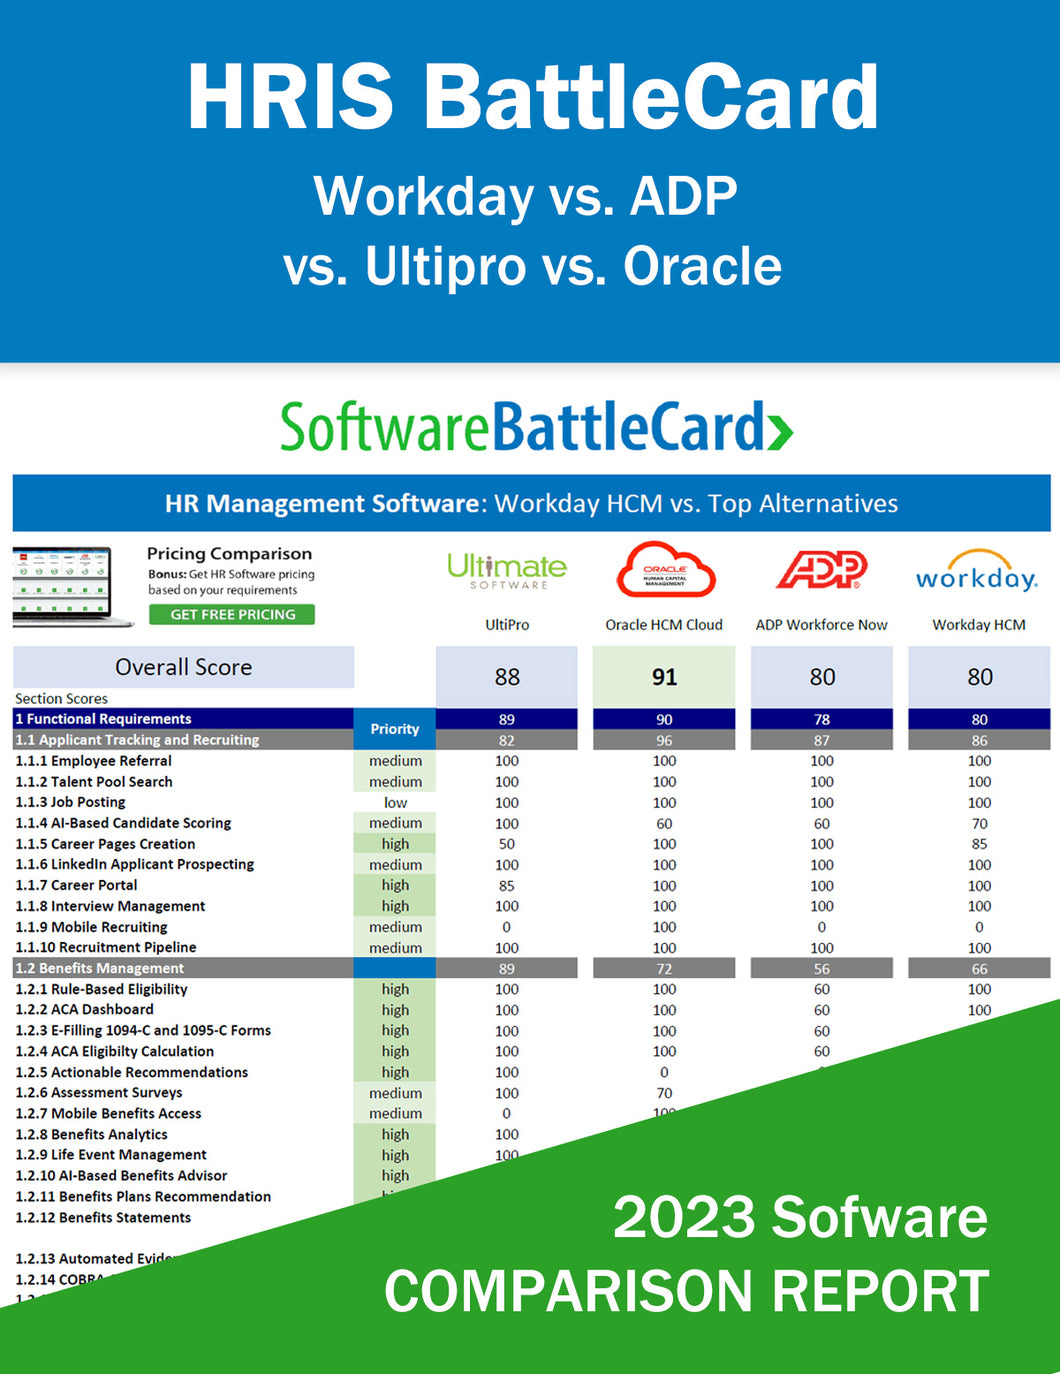 HRIS Systems BattleCard | Workday HCM vs. ADP Workforce Now vs. Ultipro vs. Oracle HCM Cloud